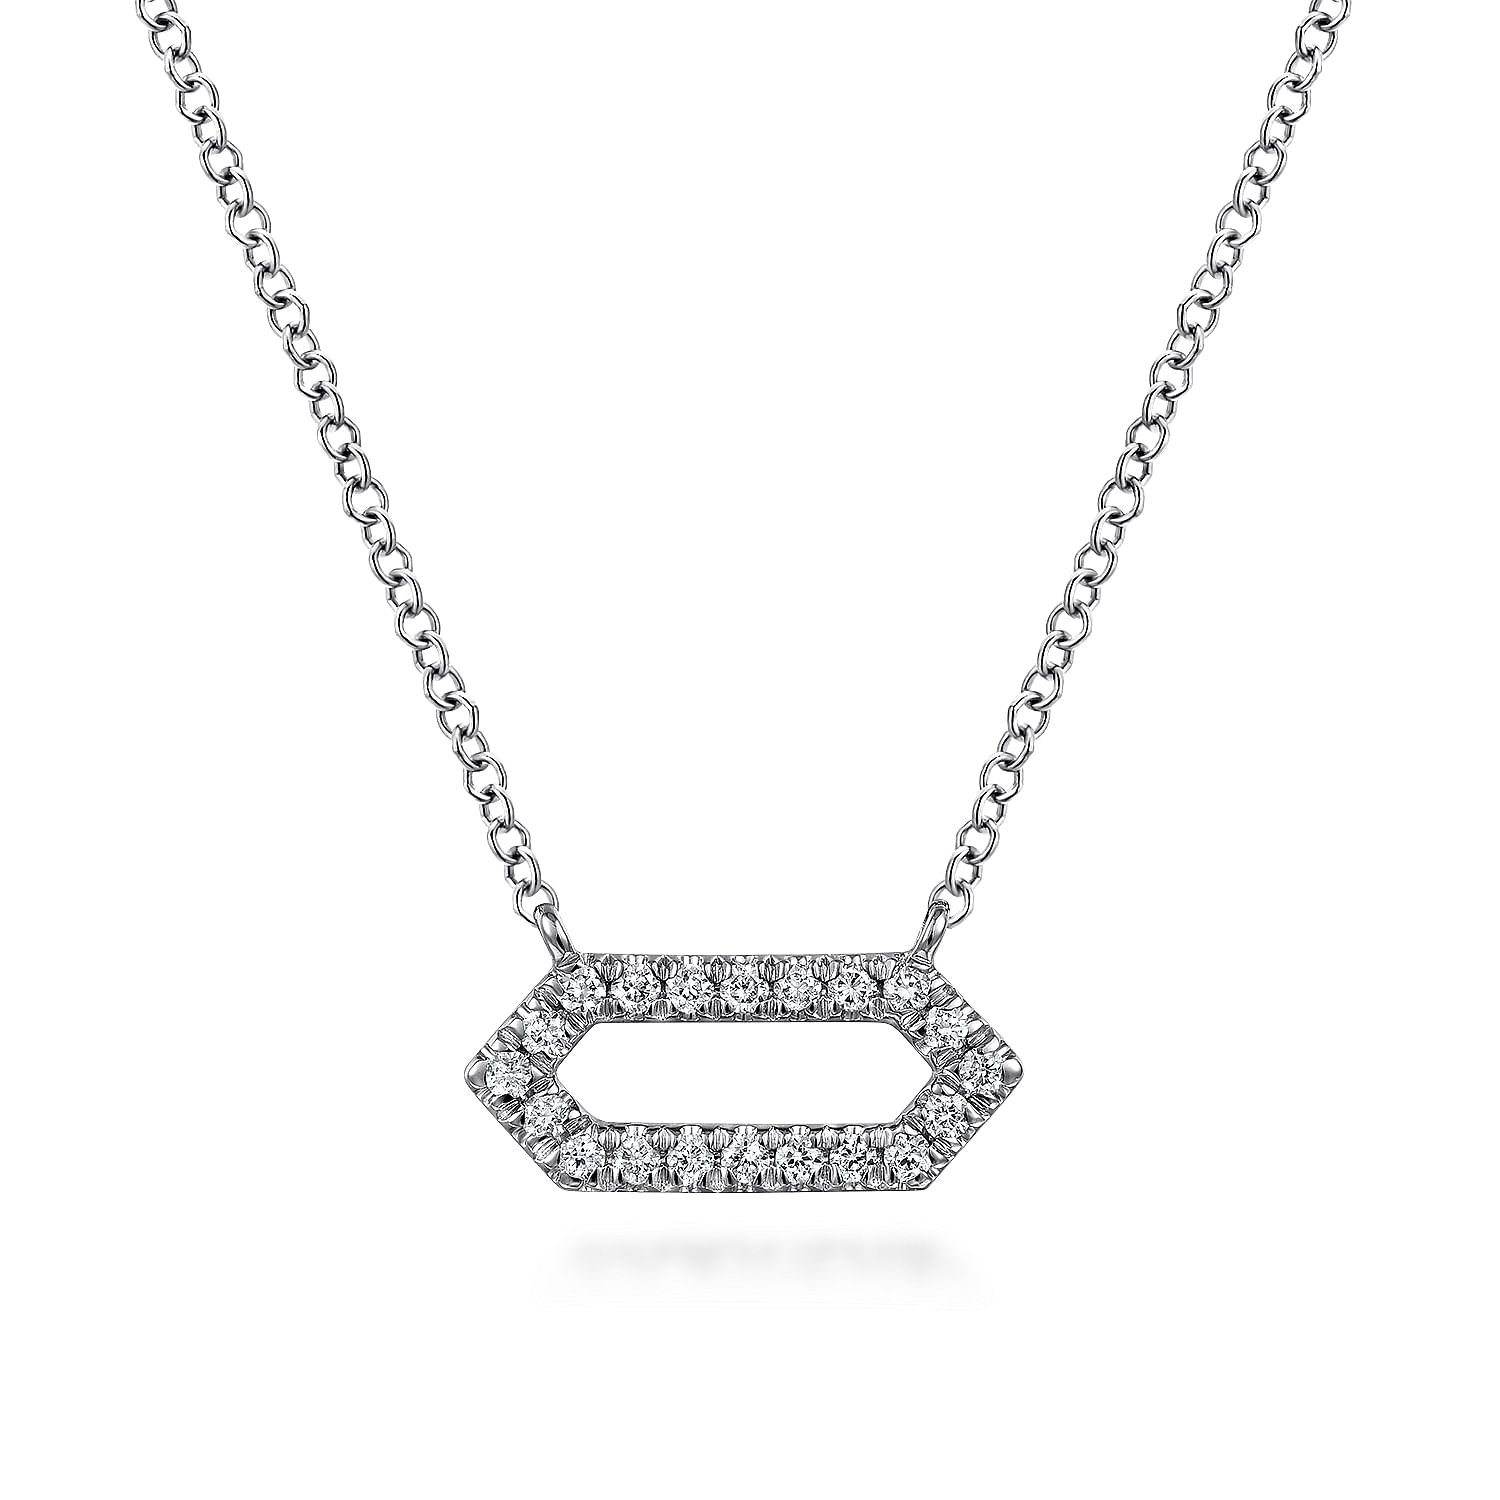 14K White Gold Elongated Hexagonal Diamond Pendant Necklace